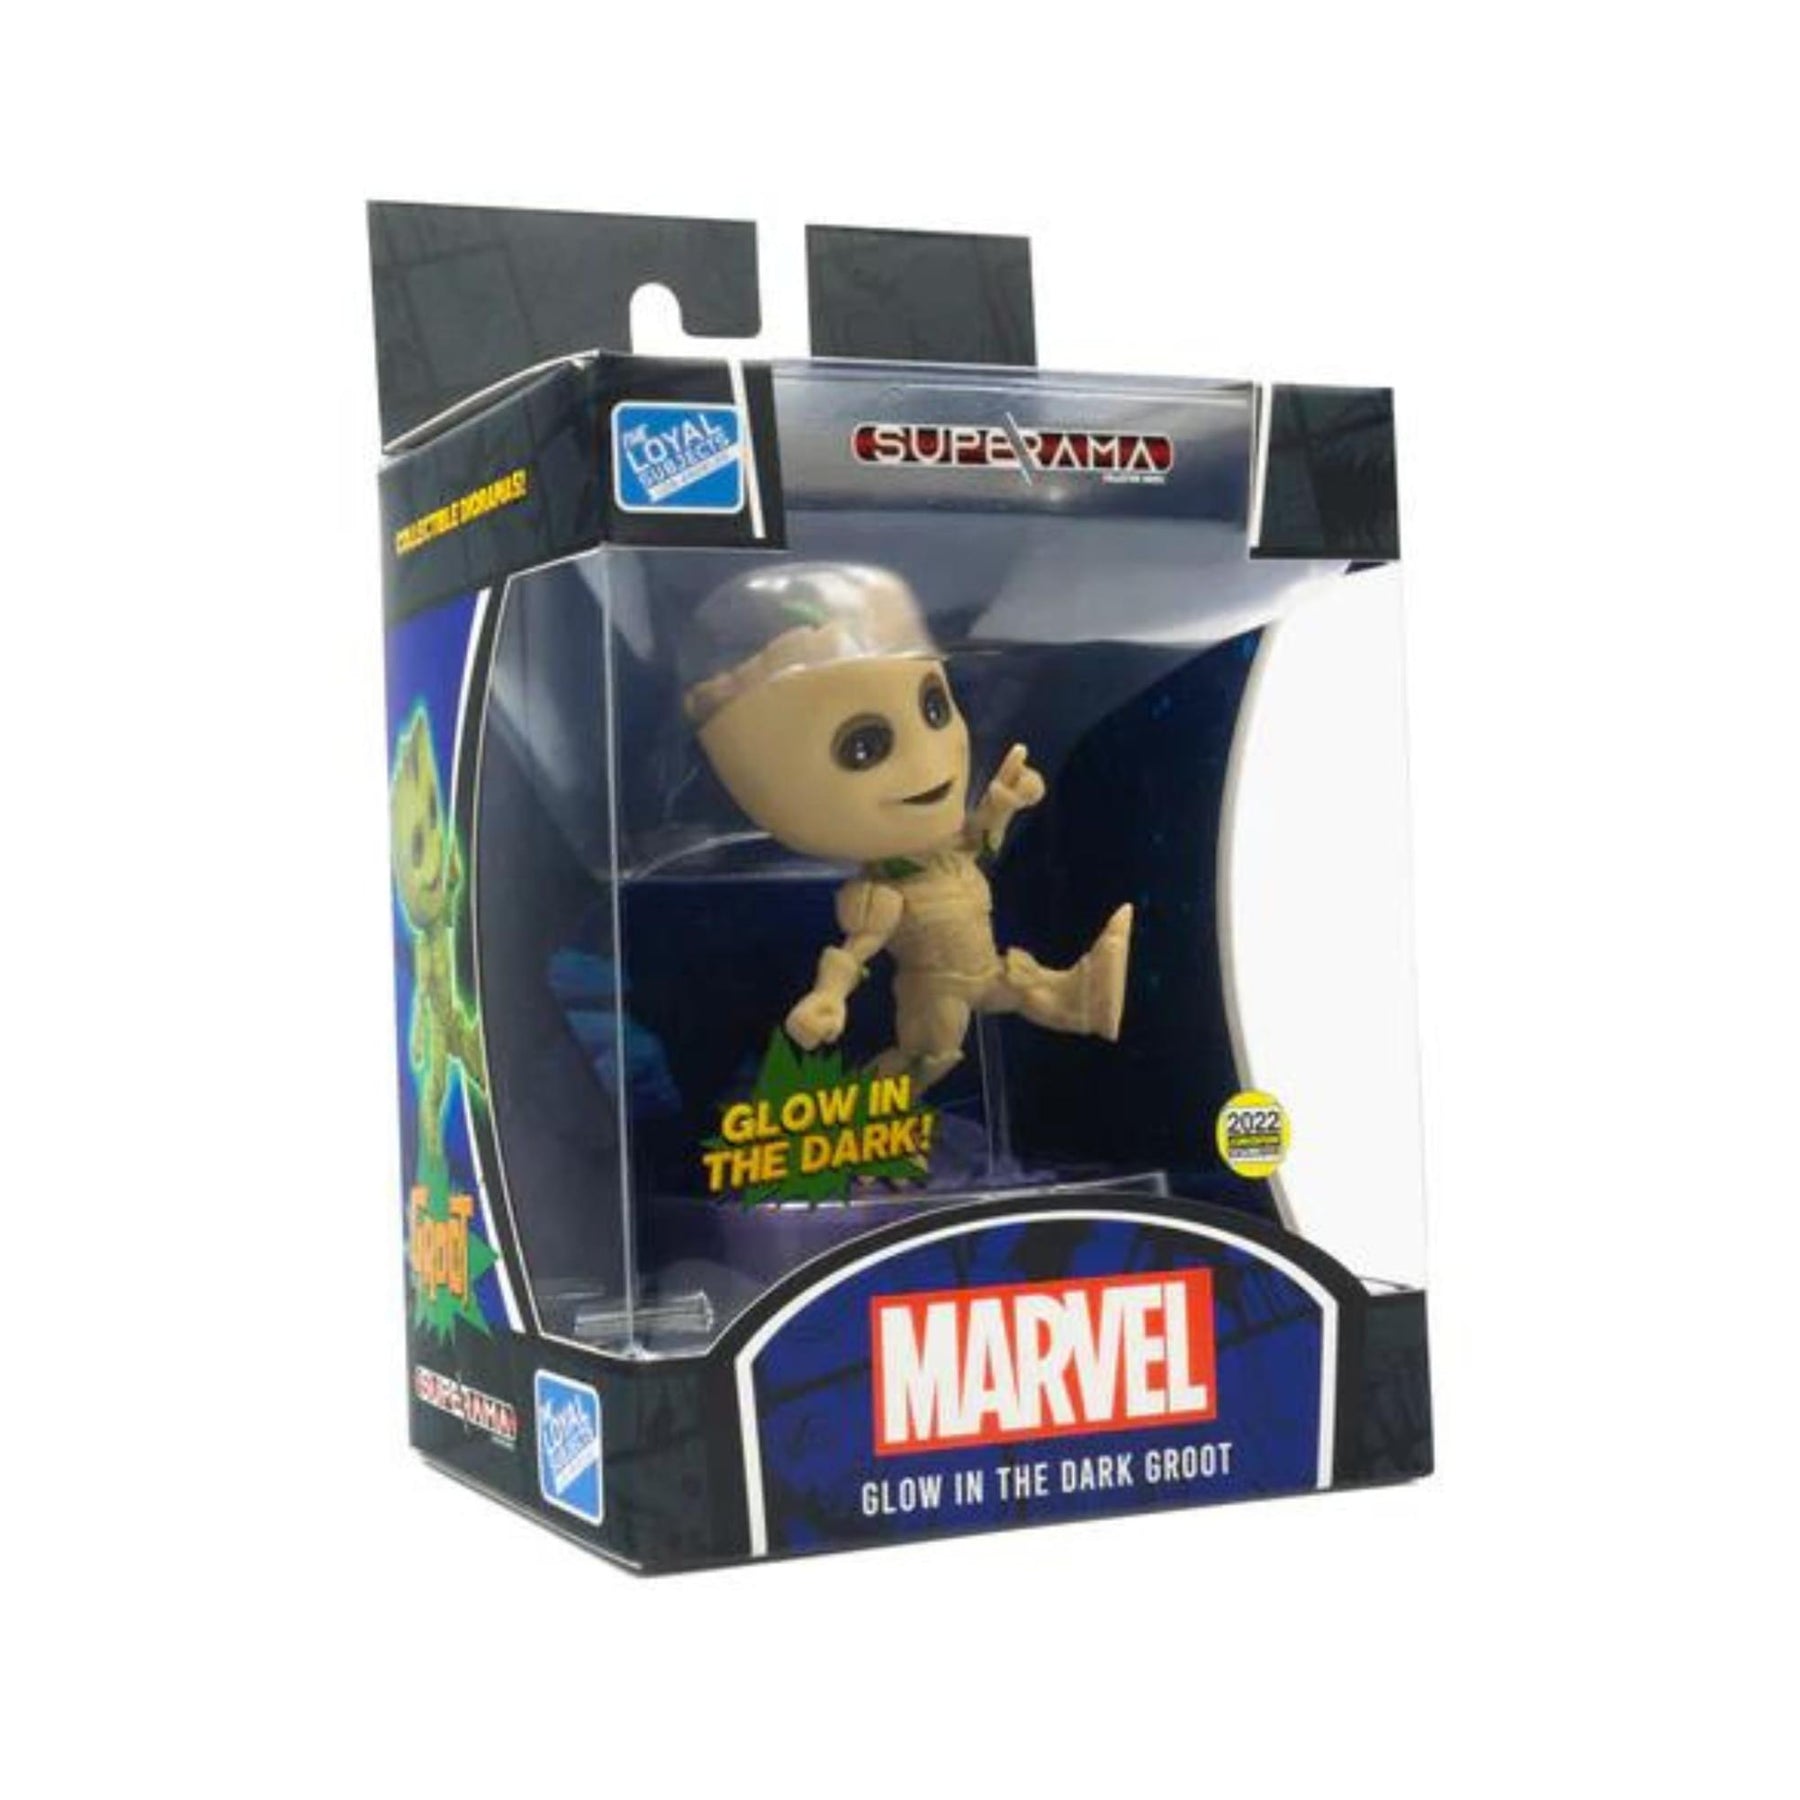 Superama Marvel W1 Groot Figureural Diorama